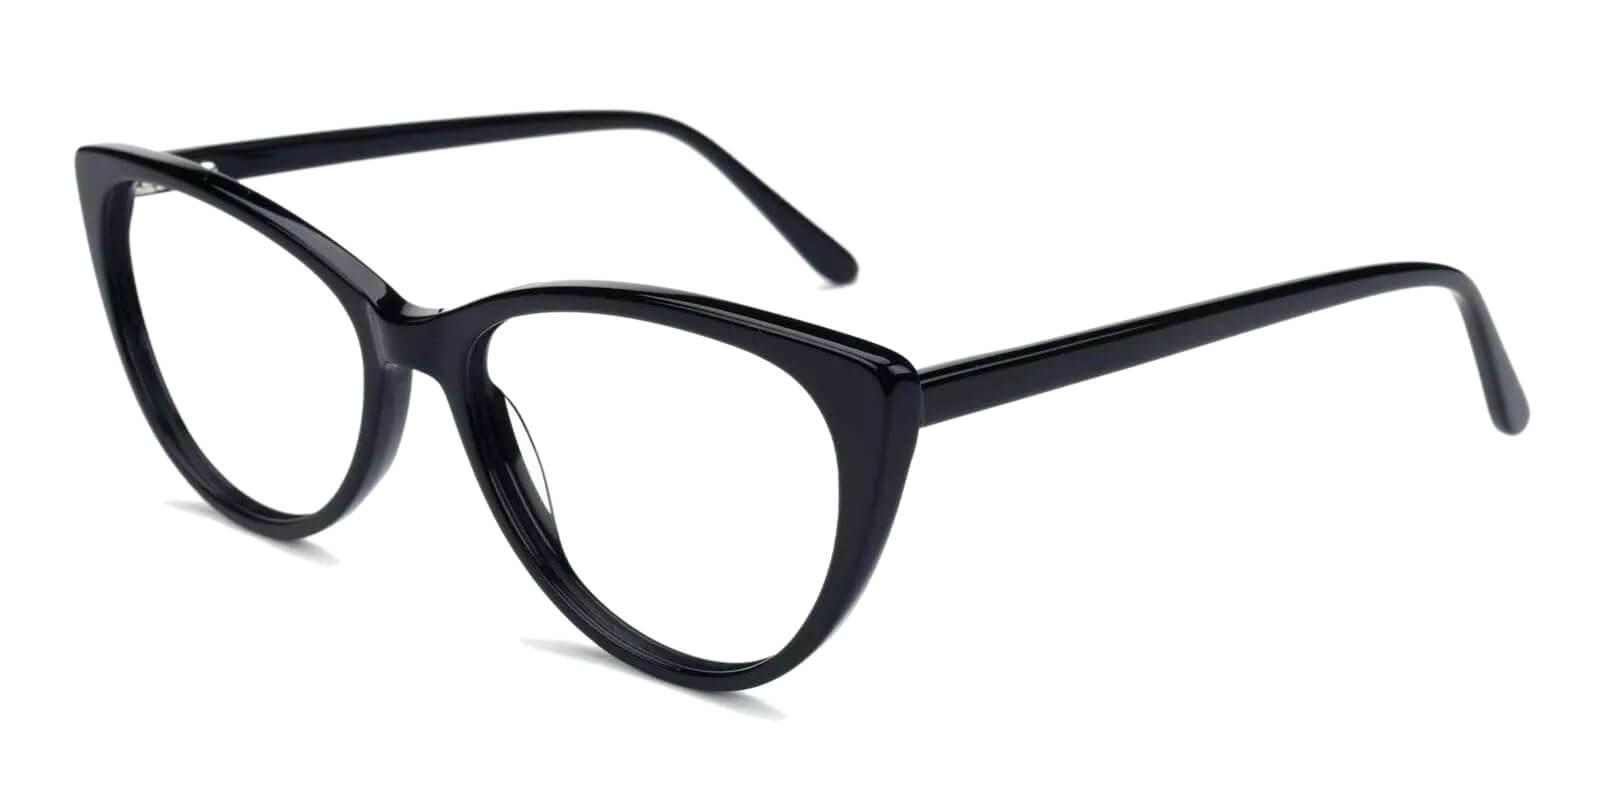 Traci Black Acetate Eyeglasses , Fashion , SpringHinges , UniversalBridgeFit Frames from ABBE Glasses